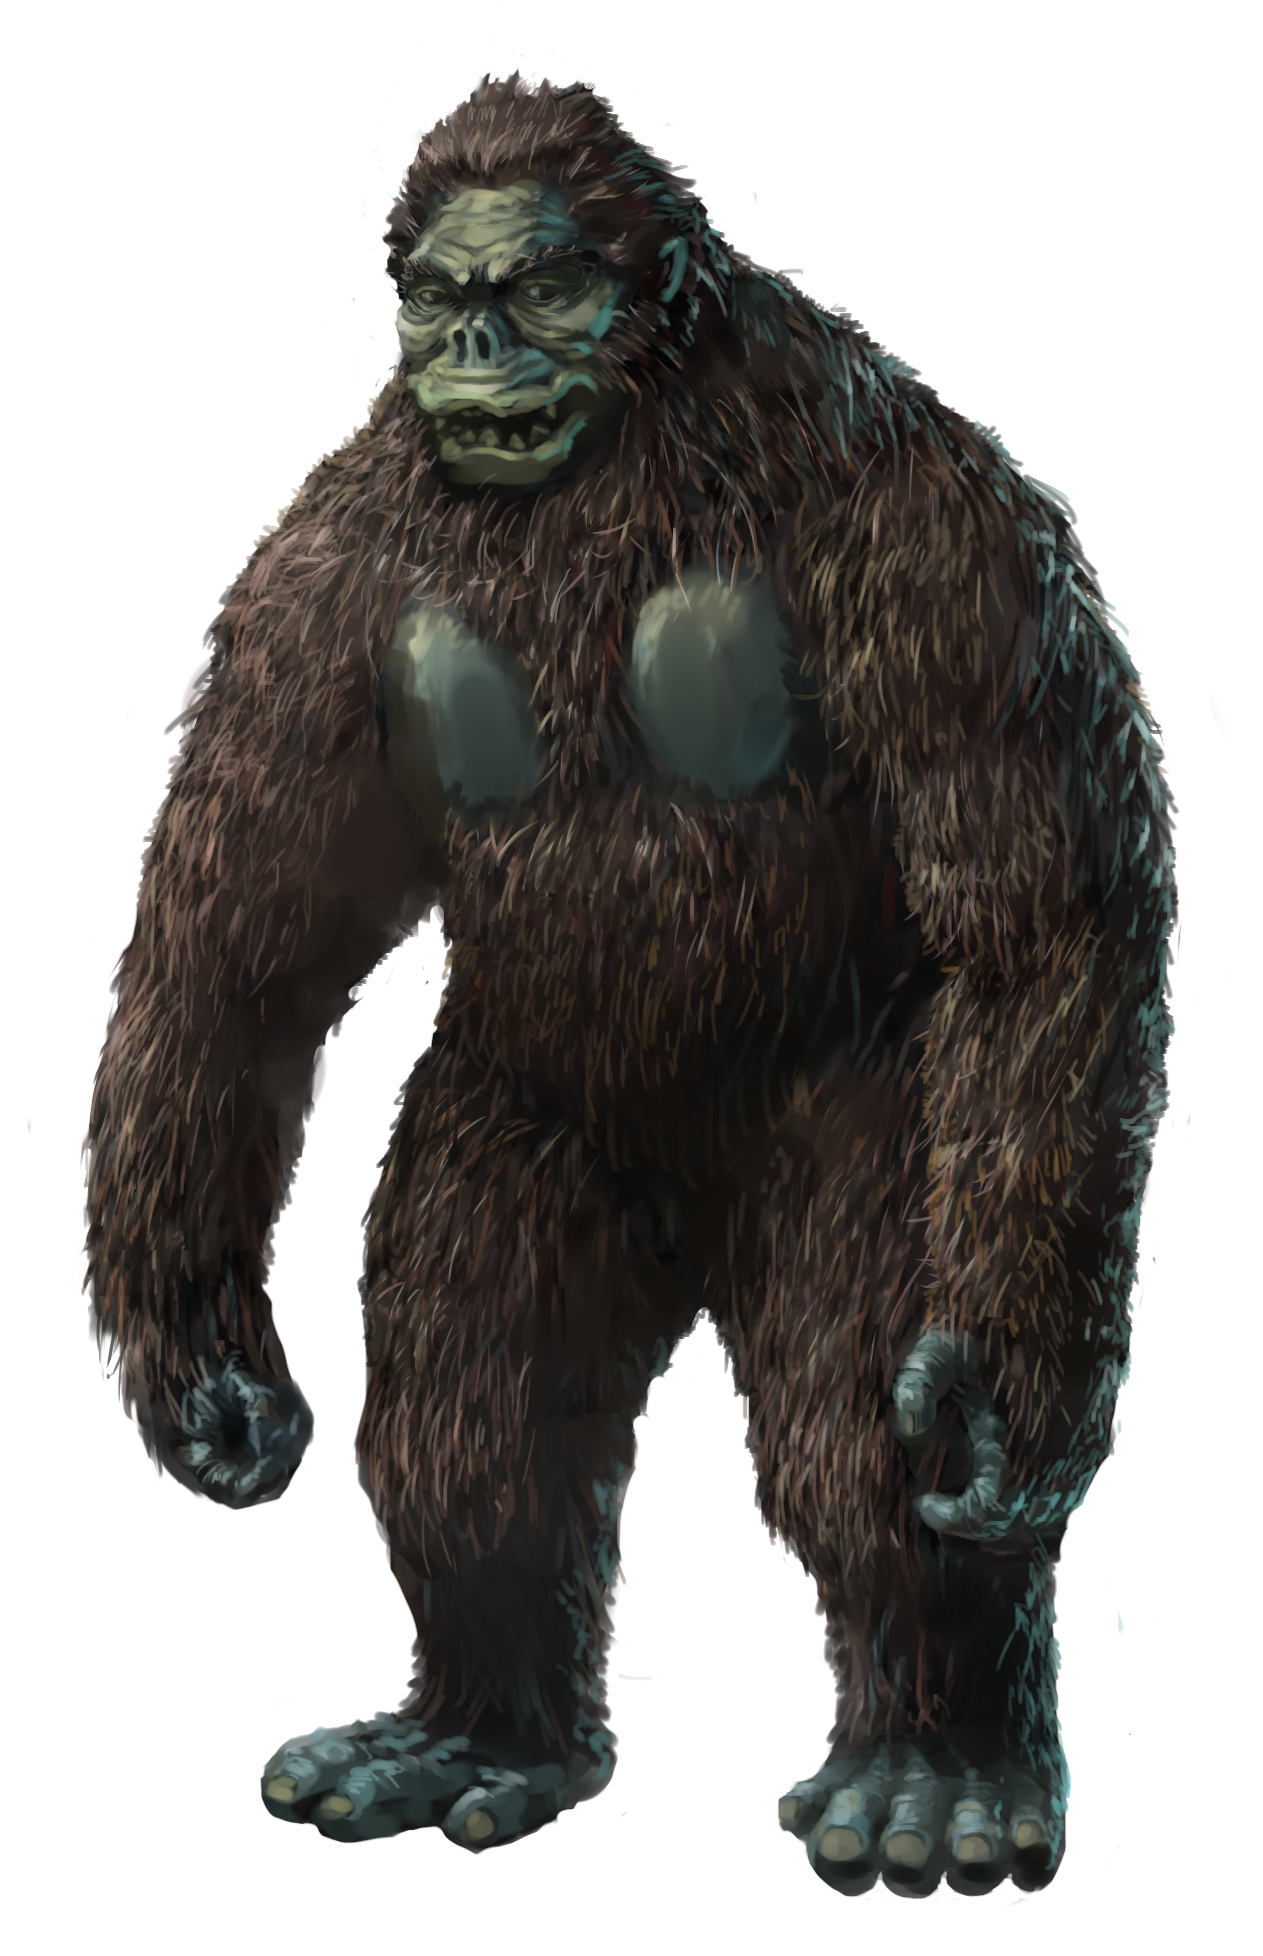 Ian Cassidy V Twitter Tafultra Godzilla Second Showa Height 50 Meters Tall And King Kong Stood 45 Meters Tall Twitter